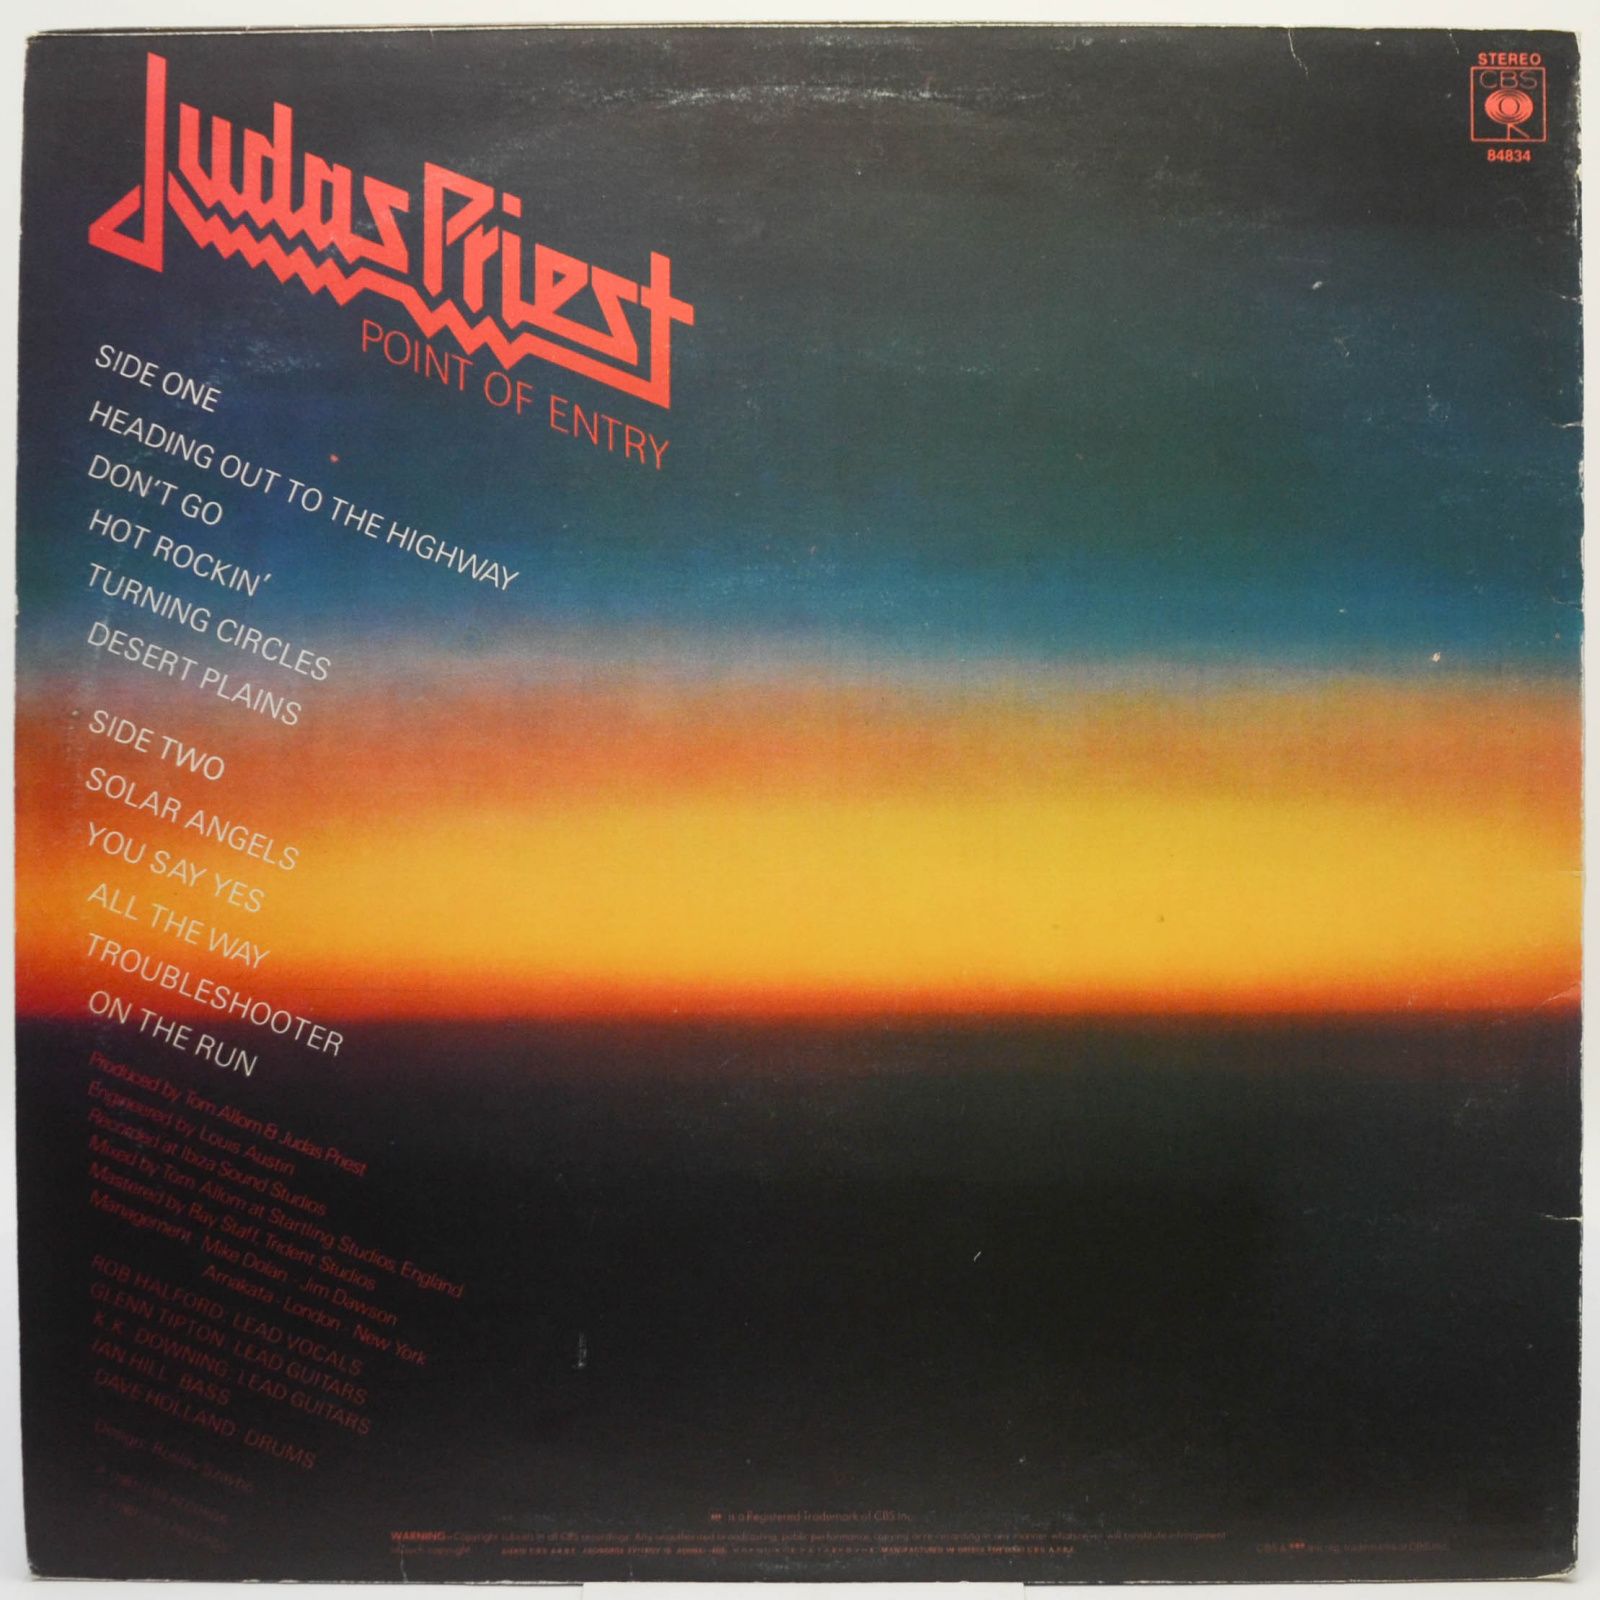 Invincible shield judas priest альбомы. Judas Priest "point of entry". Judas Priest point of entry LP. Judas in Priest albums.